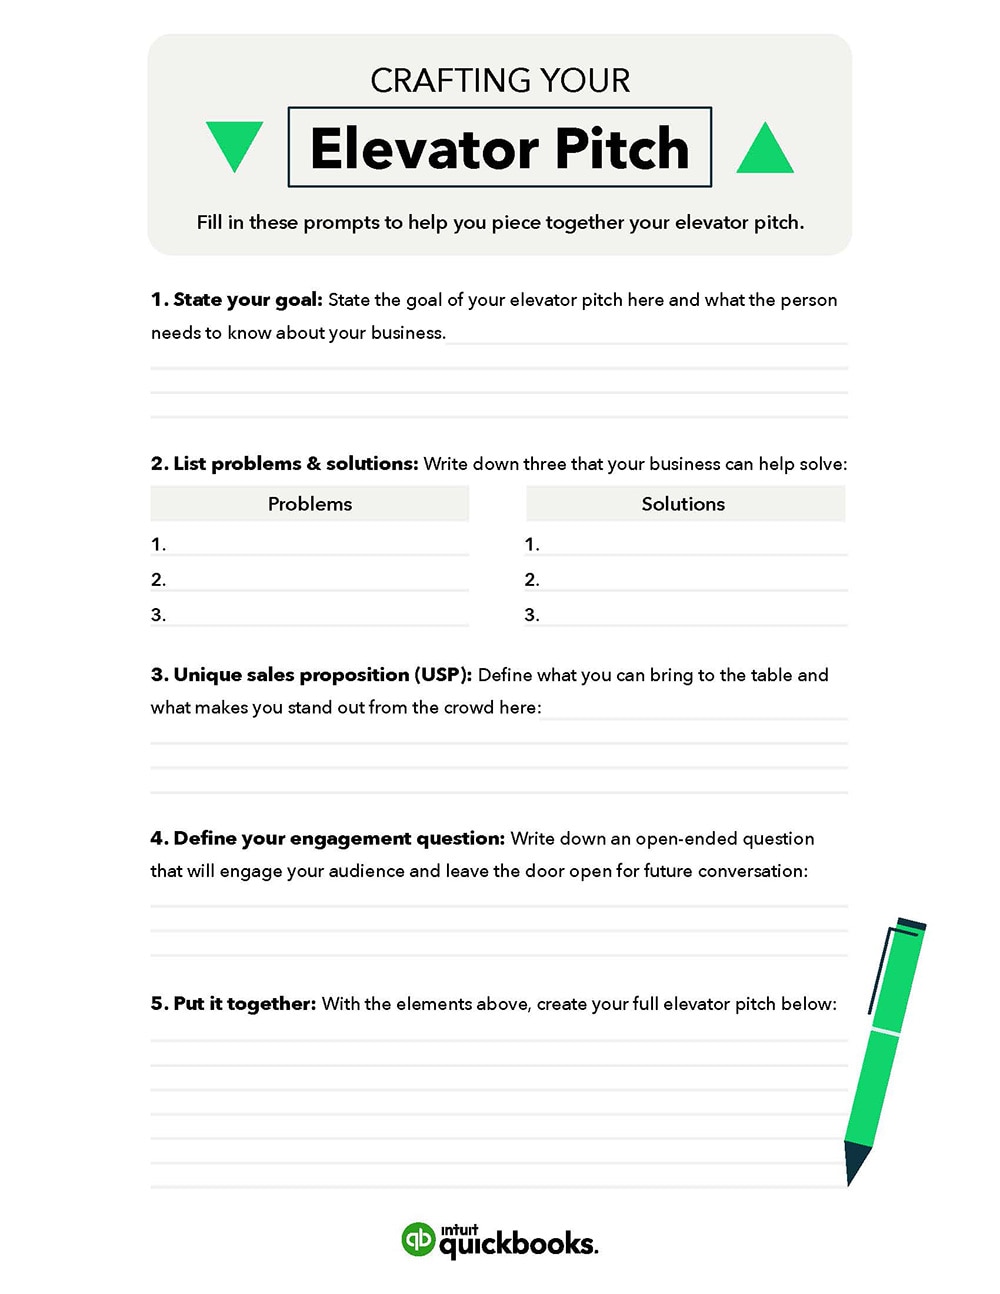 Elevator pitch template